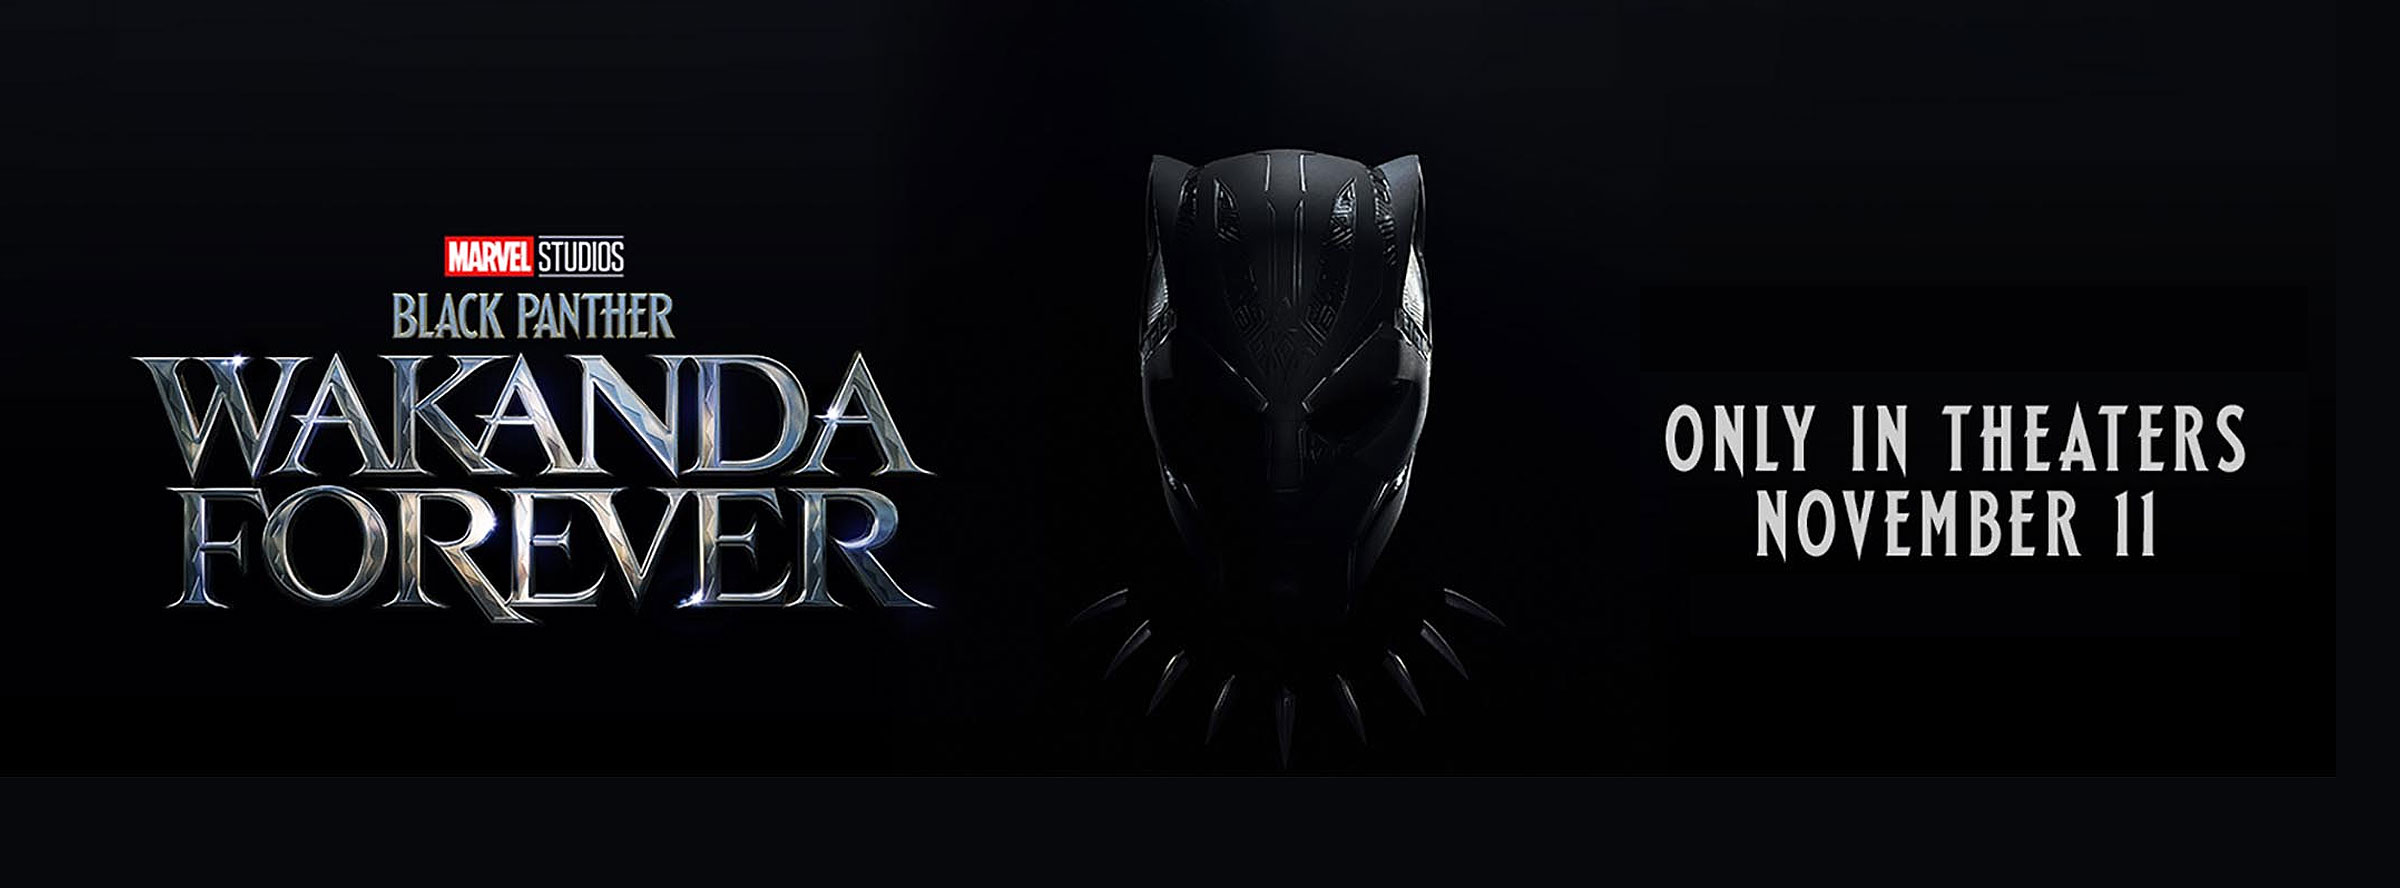 Slider Image for Black Panther: Wakanda Forever                                             